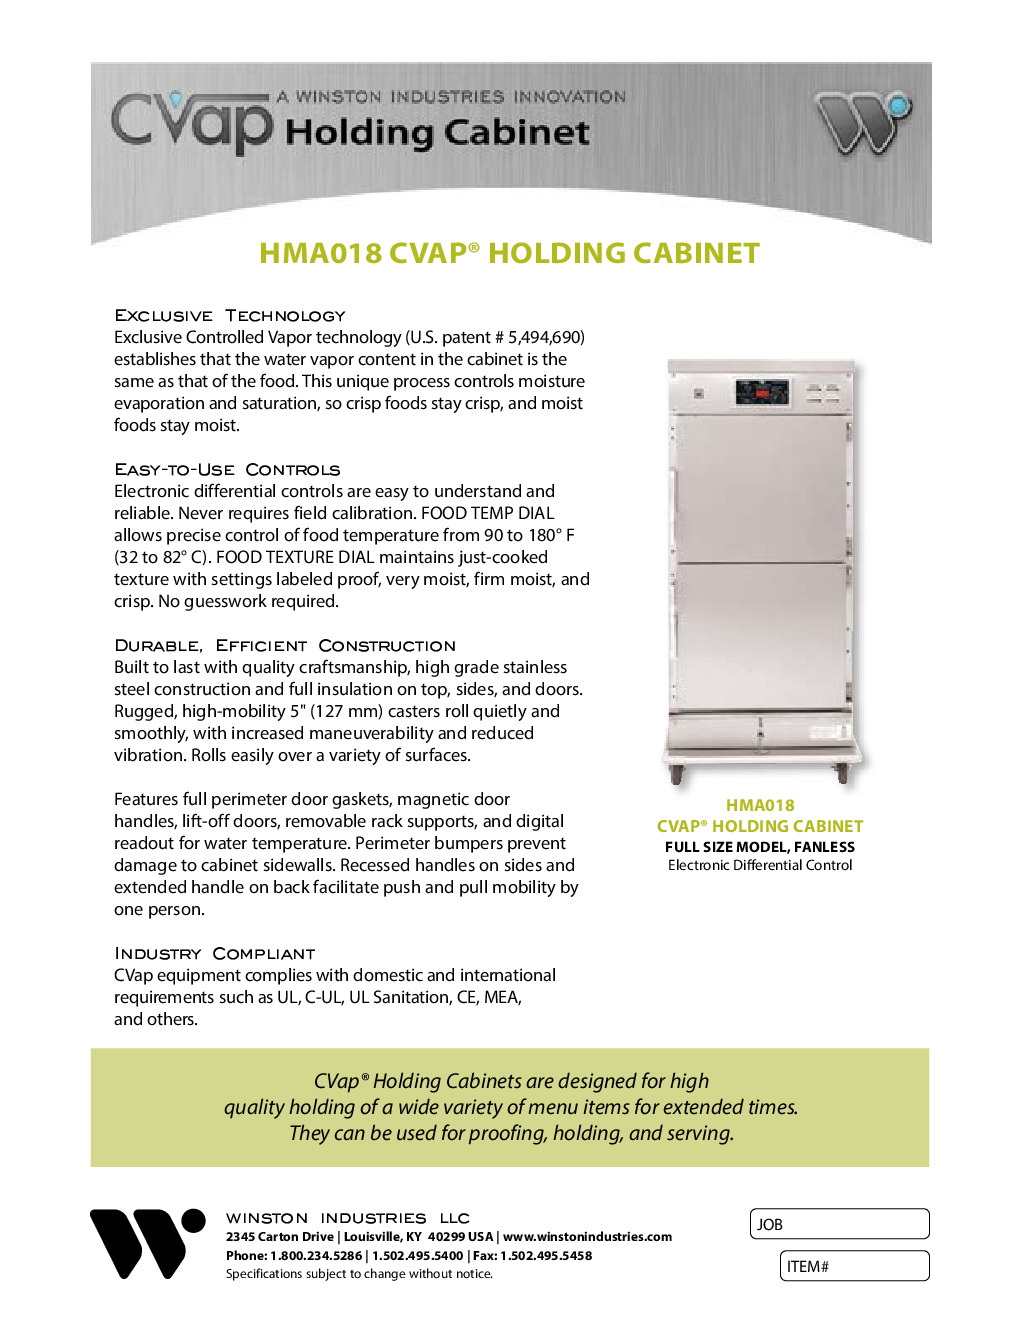 Winston HMA018 Mobile Heated Cabinet